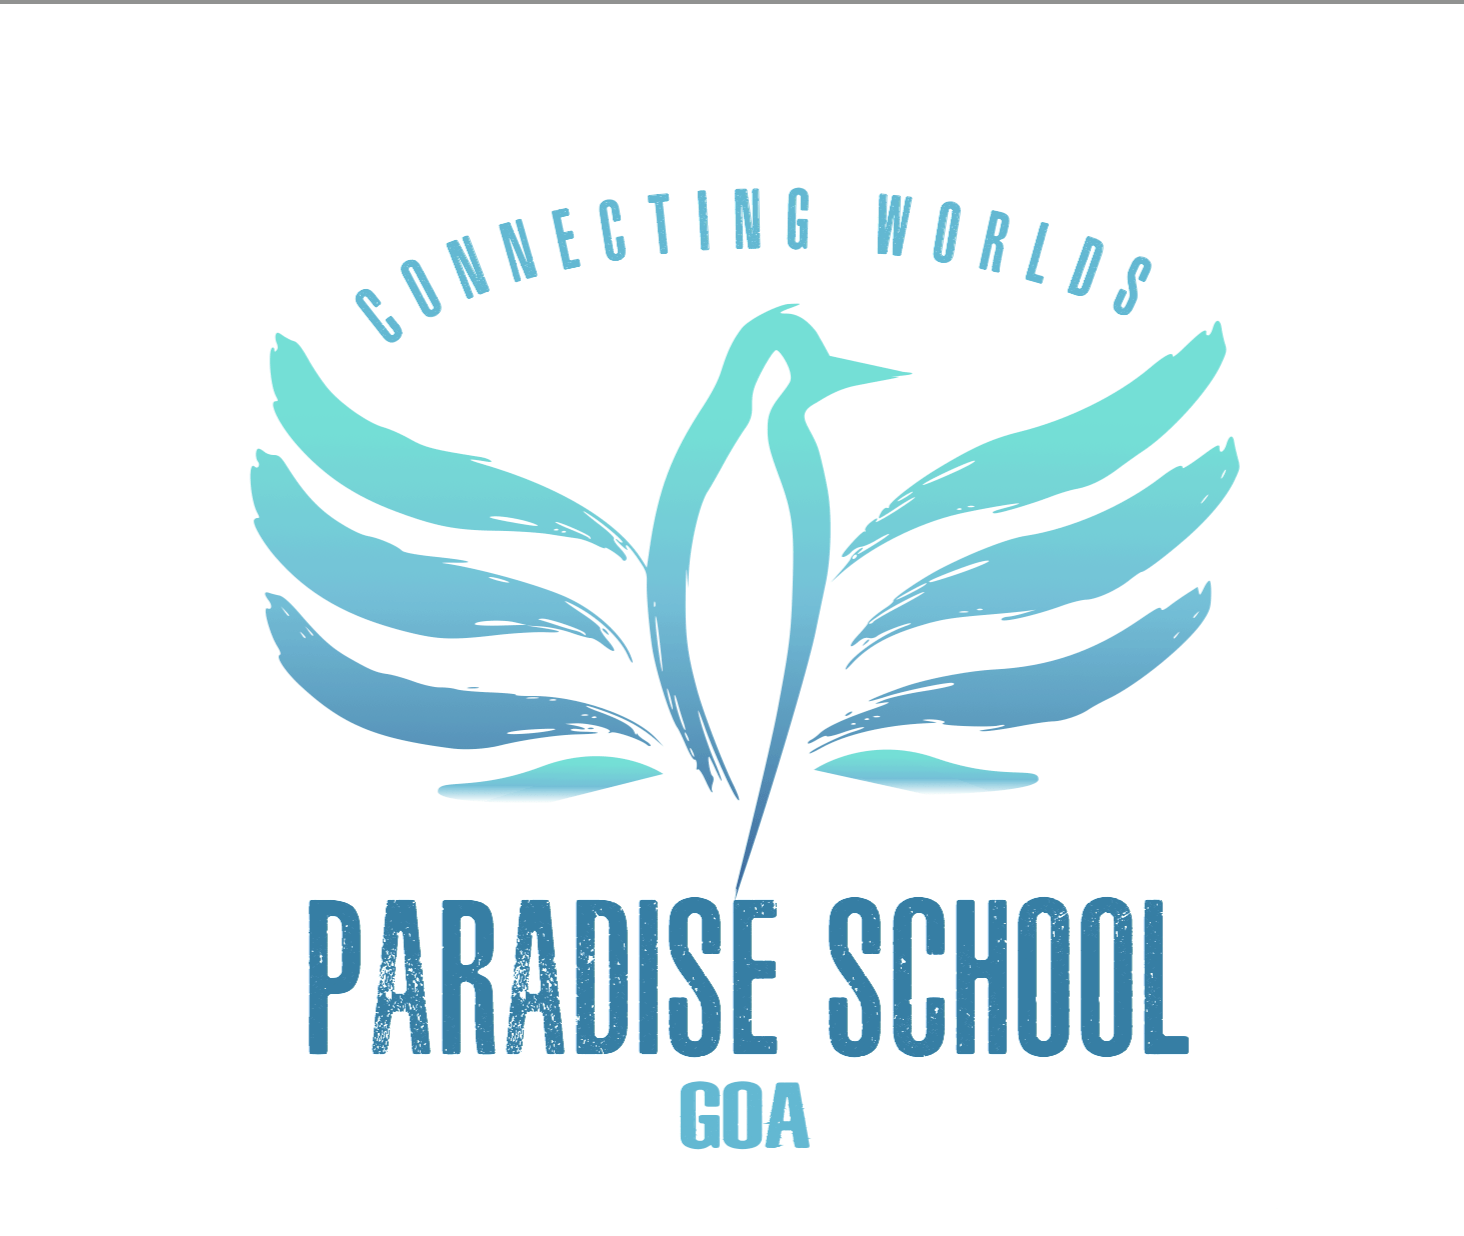 Paradise School Logo - Paradise School North Goa, India